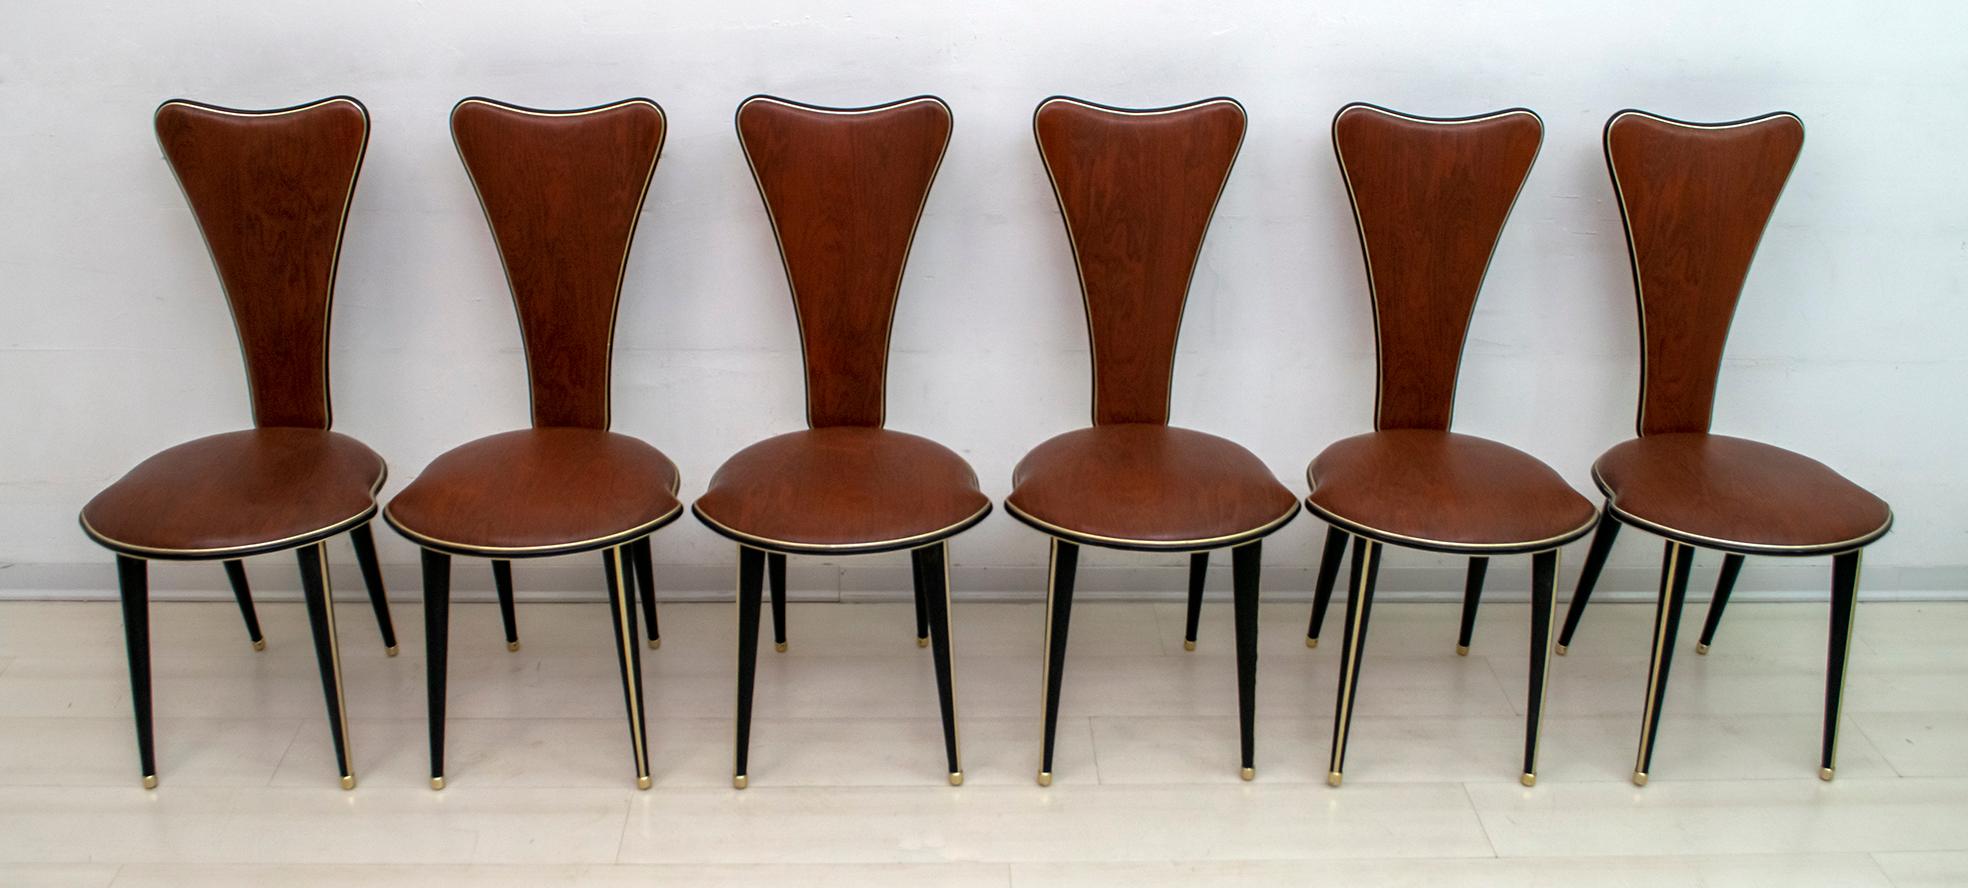 Umberto Mascagni for Harrods London Mid-Century Modern Italian Dining Table, 50s For Sale 3